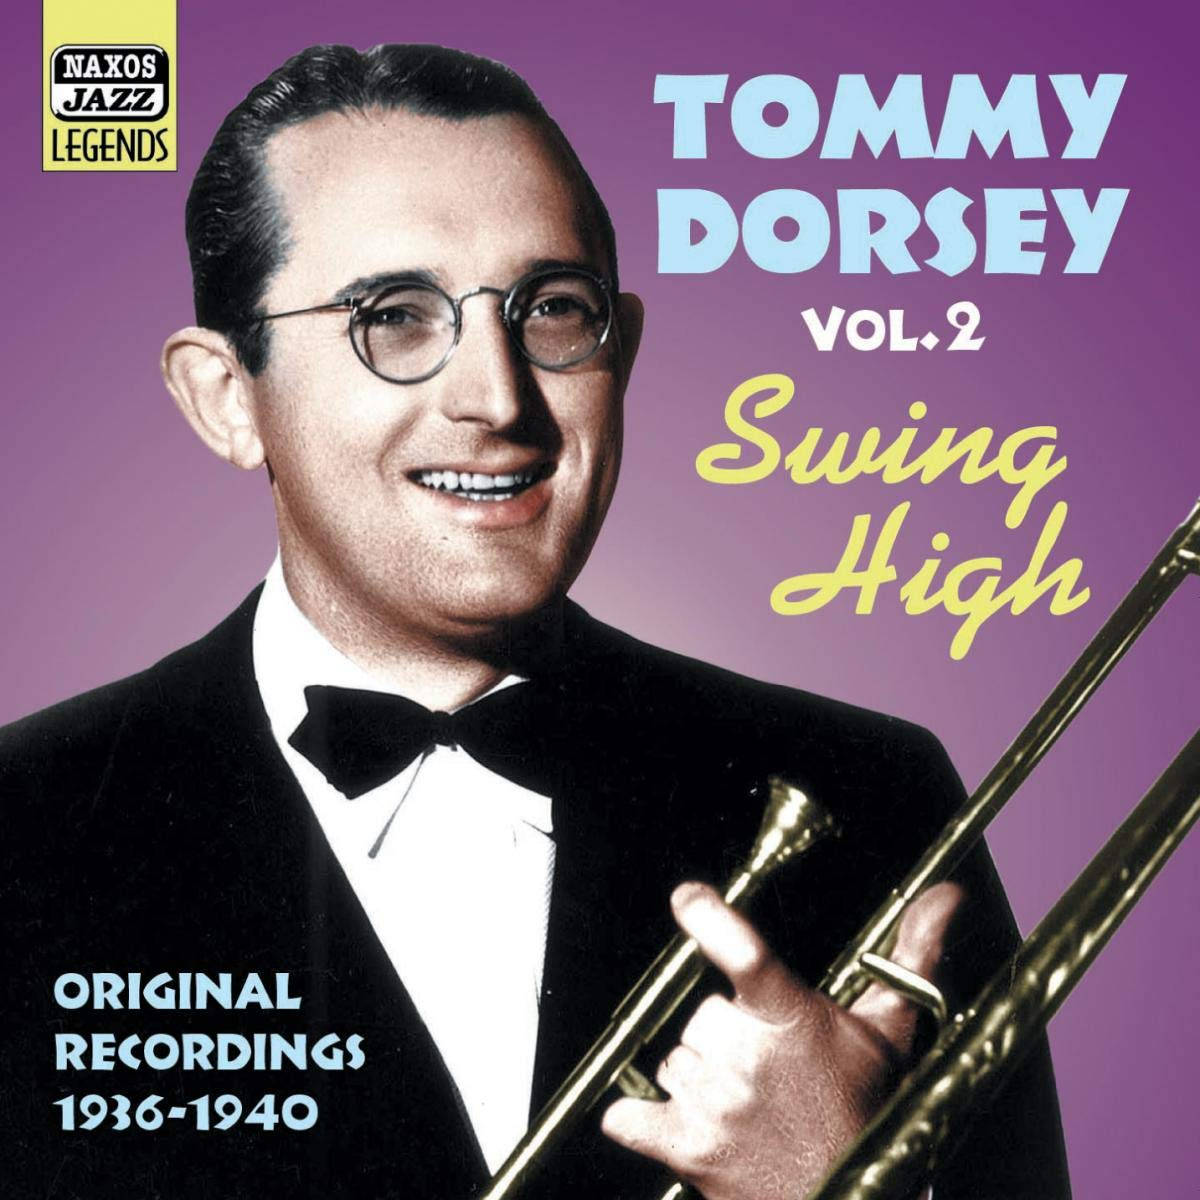 Tommy Dorsey Swing High Volume 2 Album Wallpaper